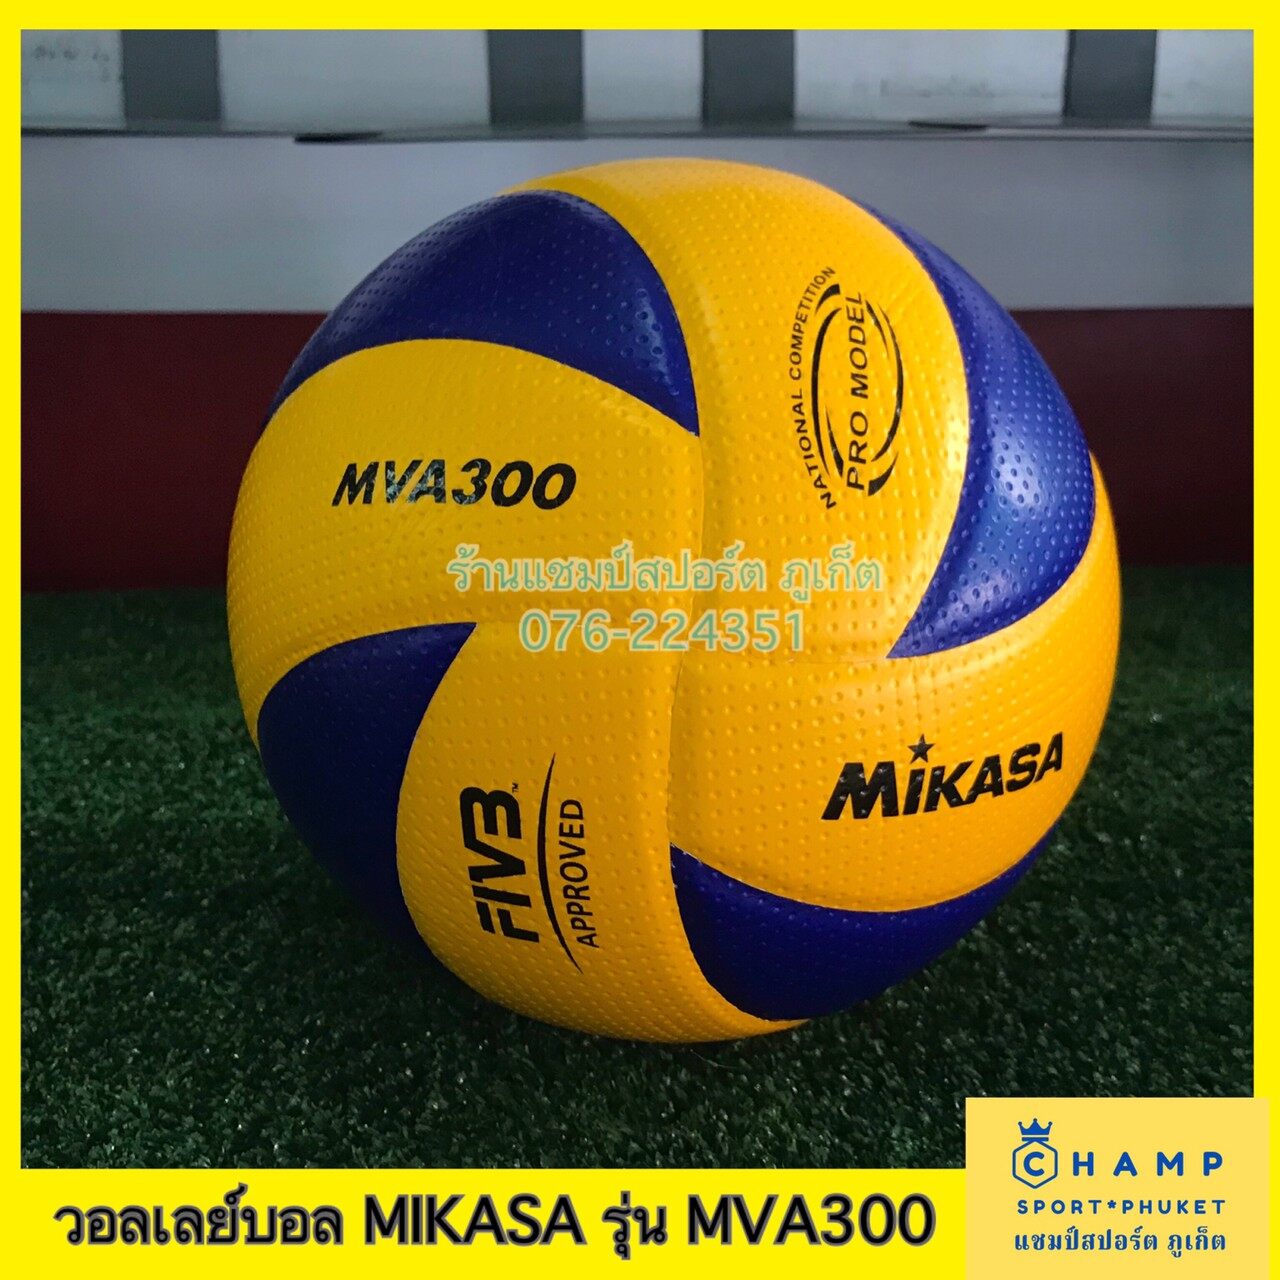 Mikasa ลูกวอลเลย์บอล Mva300 ลิขสิทธ์แท้!! Mikasa Volleyball | Lazada.Co.Th